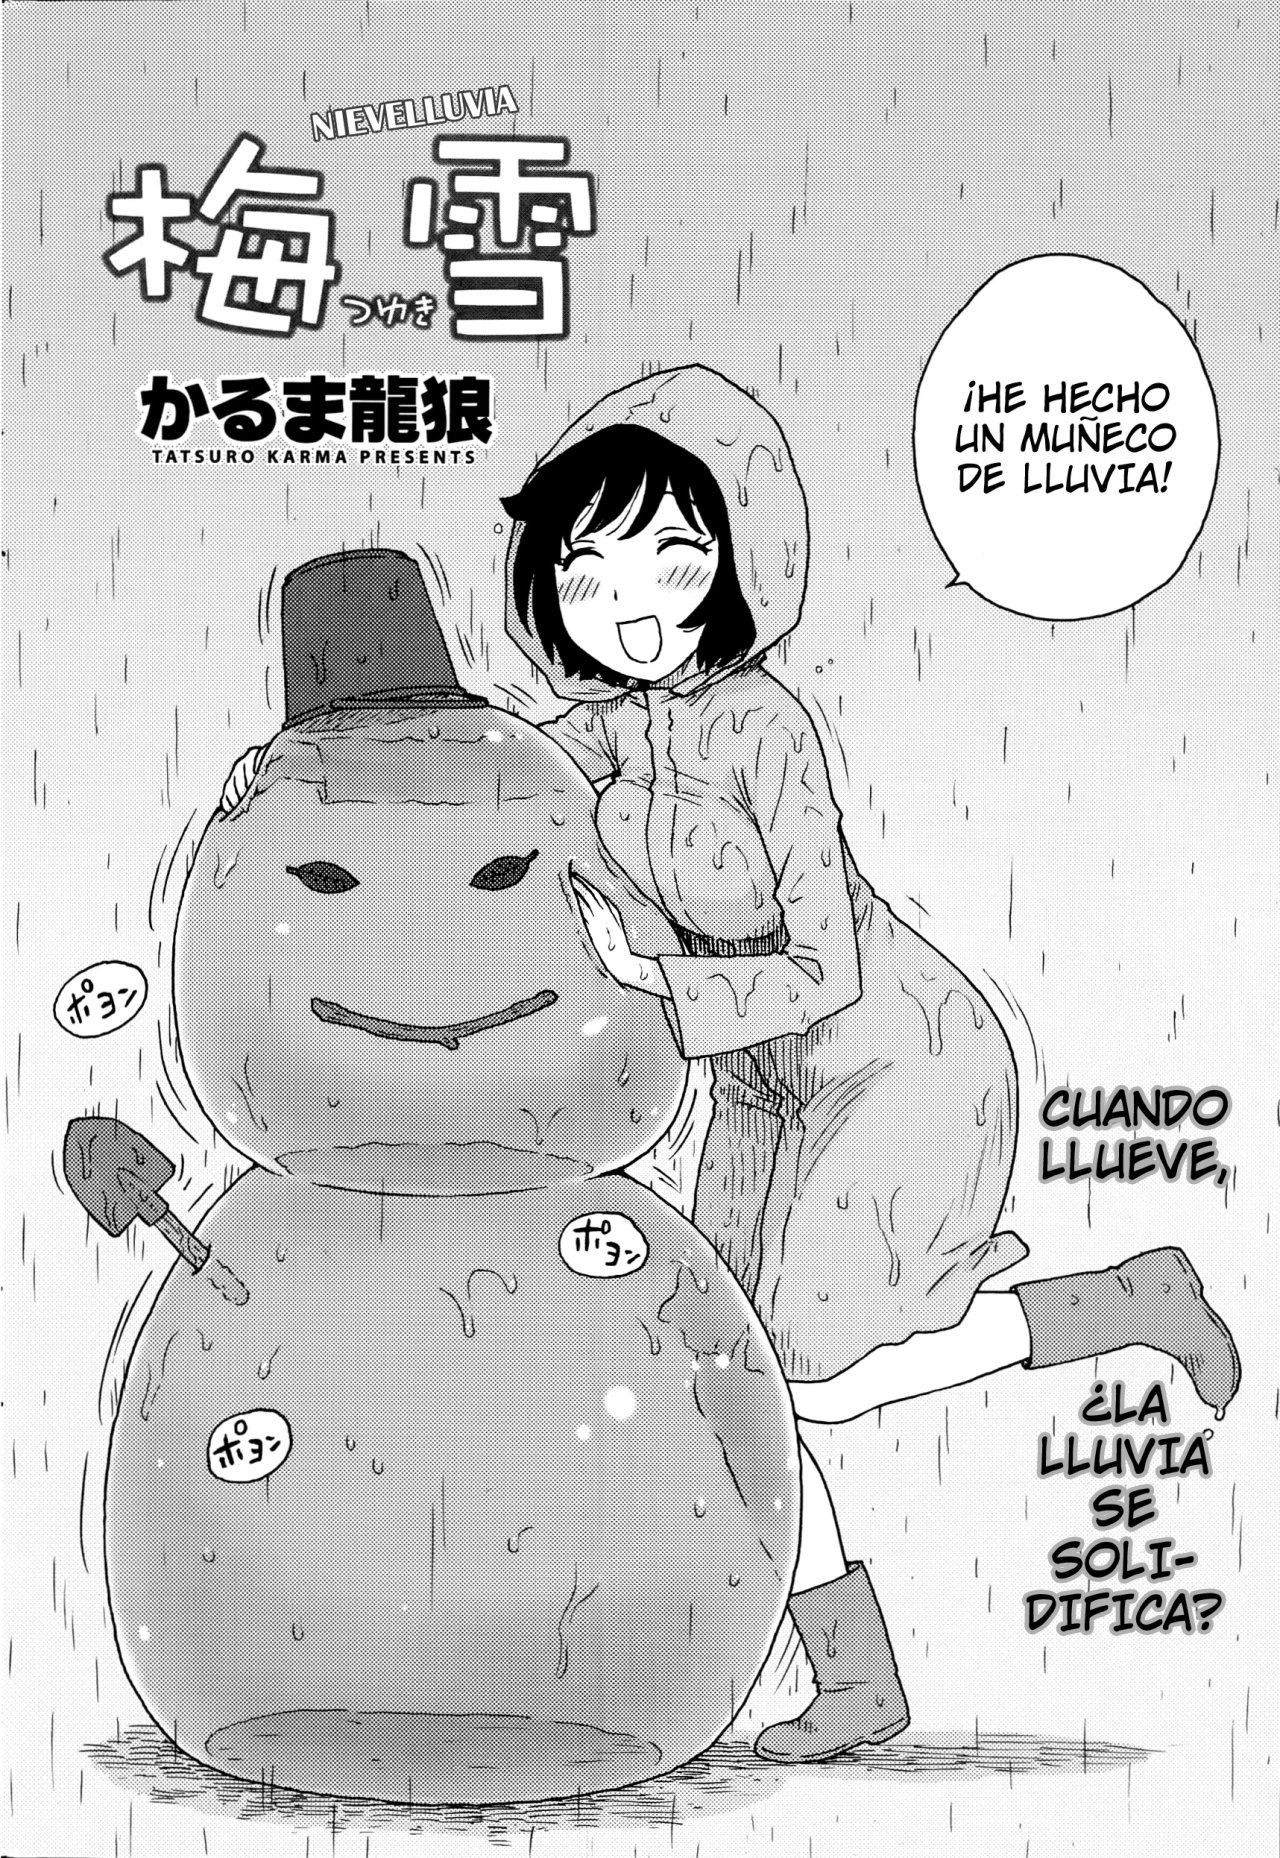 Nieve lluvia - Karma Tatsurou - 1